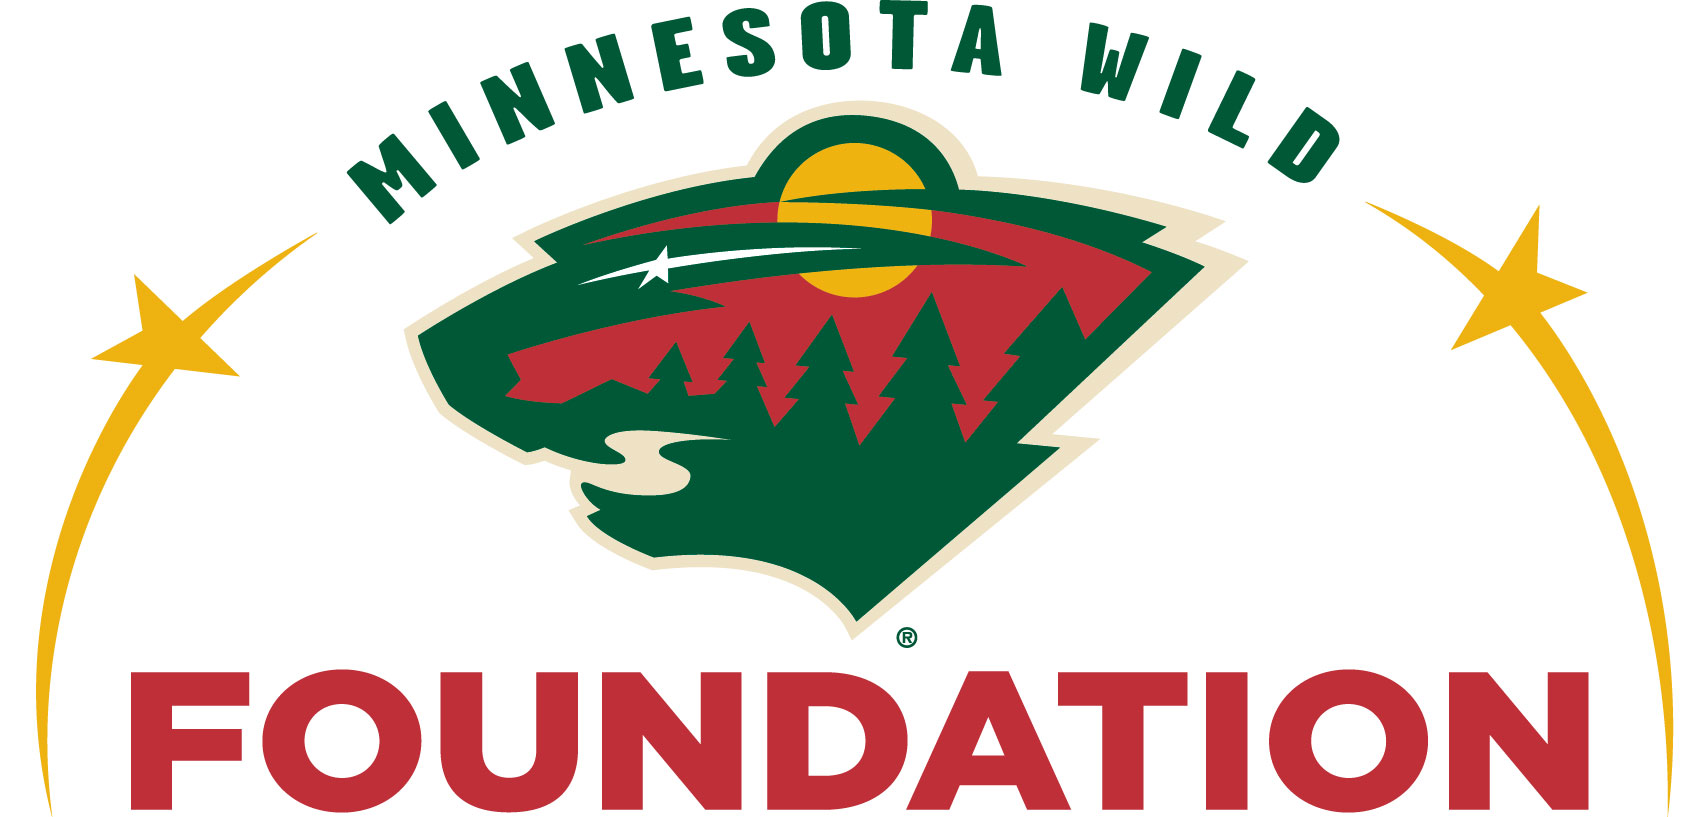 Share Minnesota Wild Logo Wallpaper Gallery To The